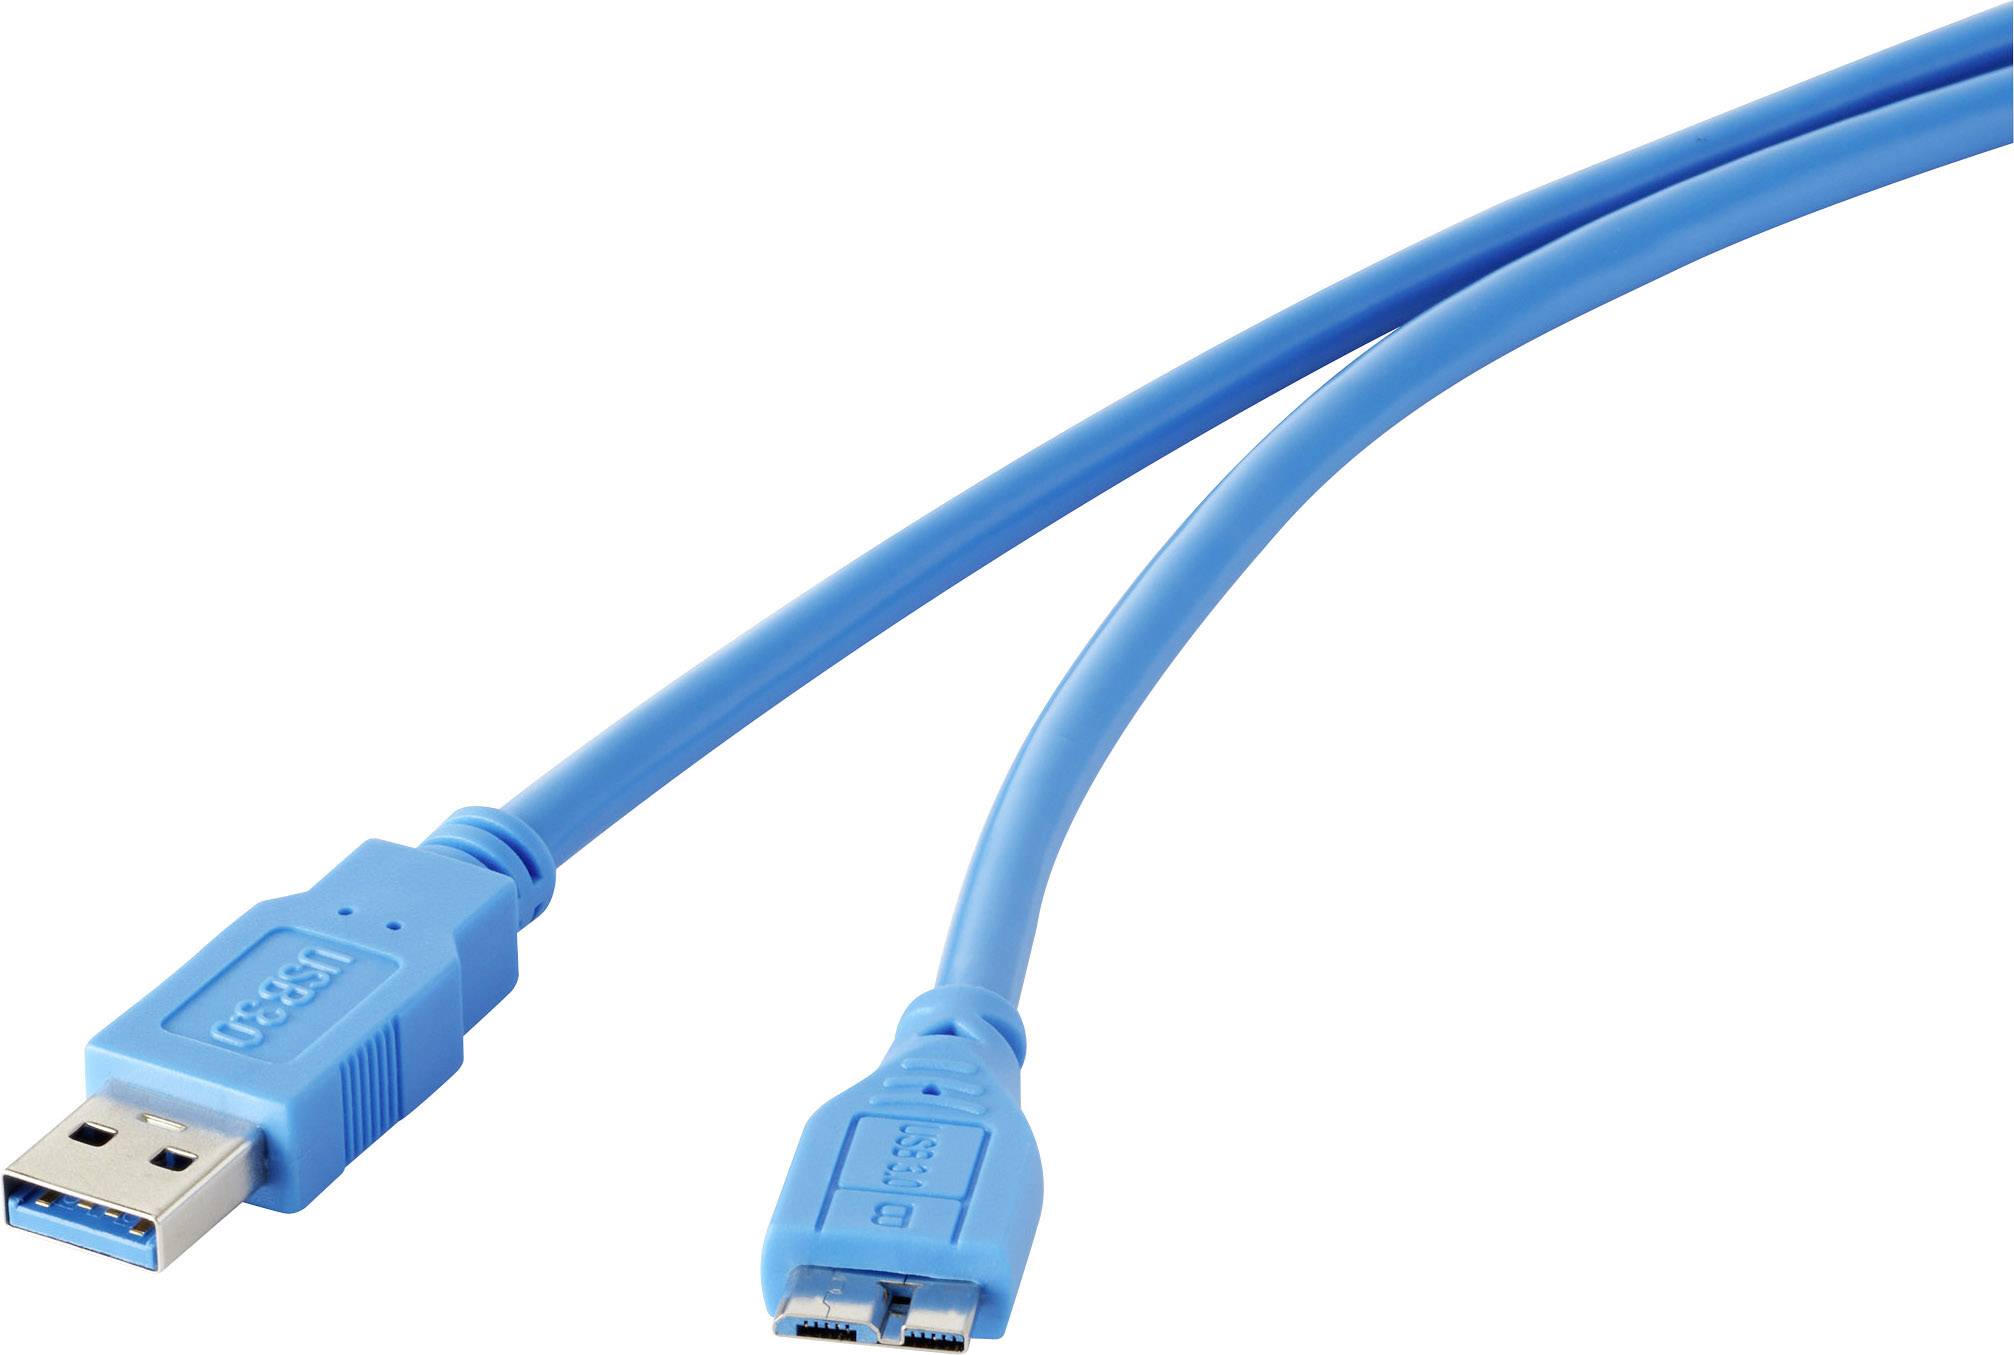 CONRAD USB 3.0 Kabel [1x USB 3.0 Stecker A - 1x USB 3.0 Stecker Micro B] 1 m Blau vergoldete Steckko